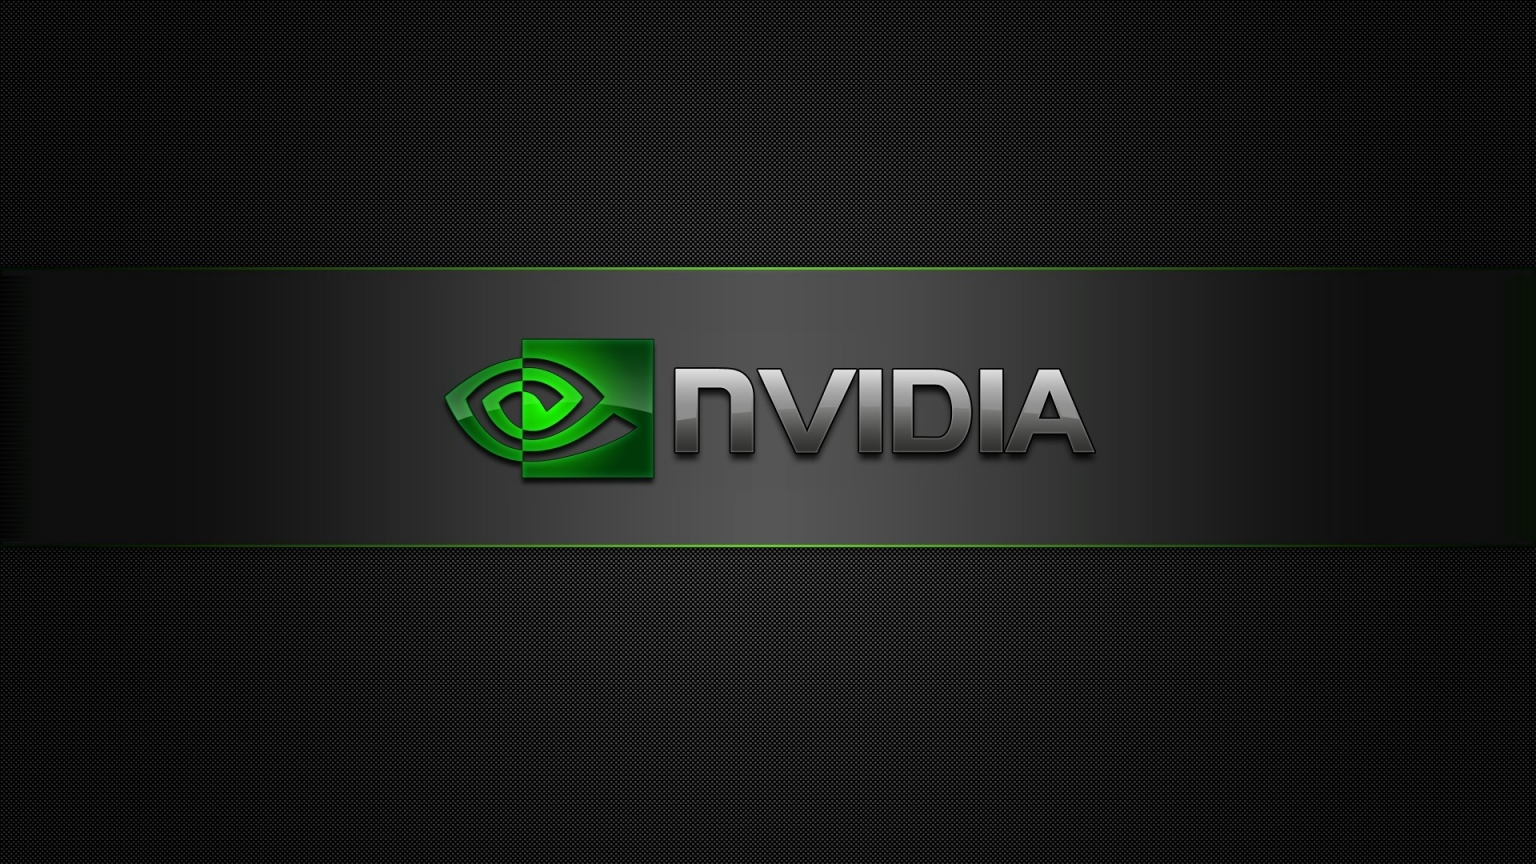 Nvidia Minimalistic for 1536 x 864 HDTV resolution